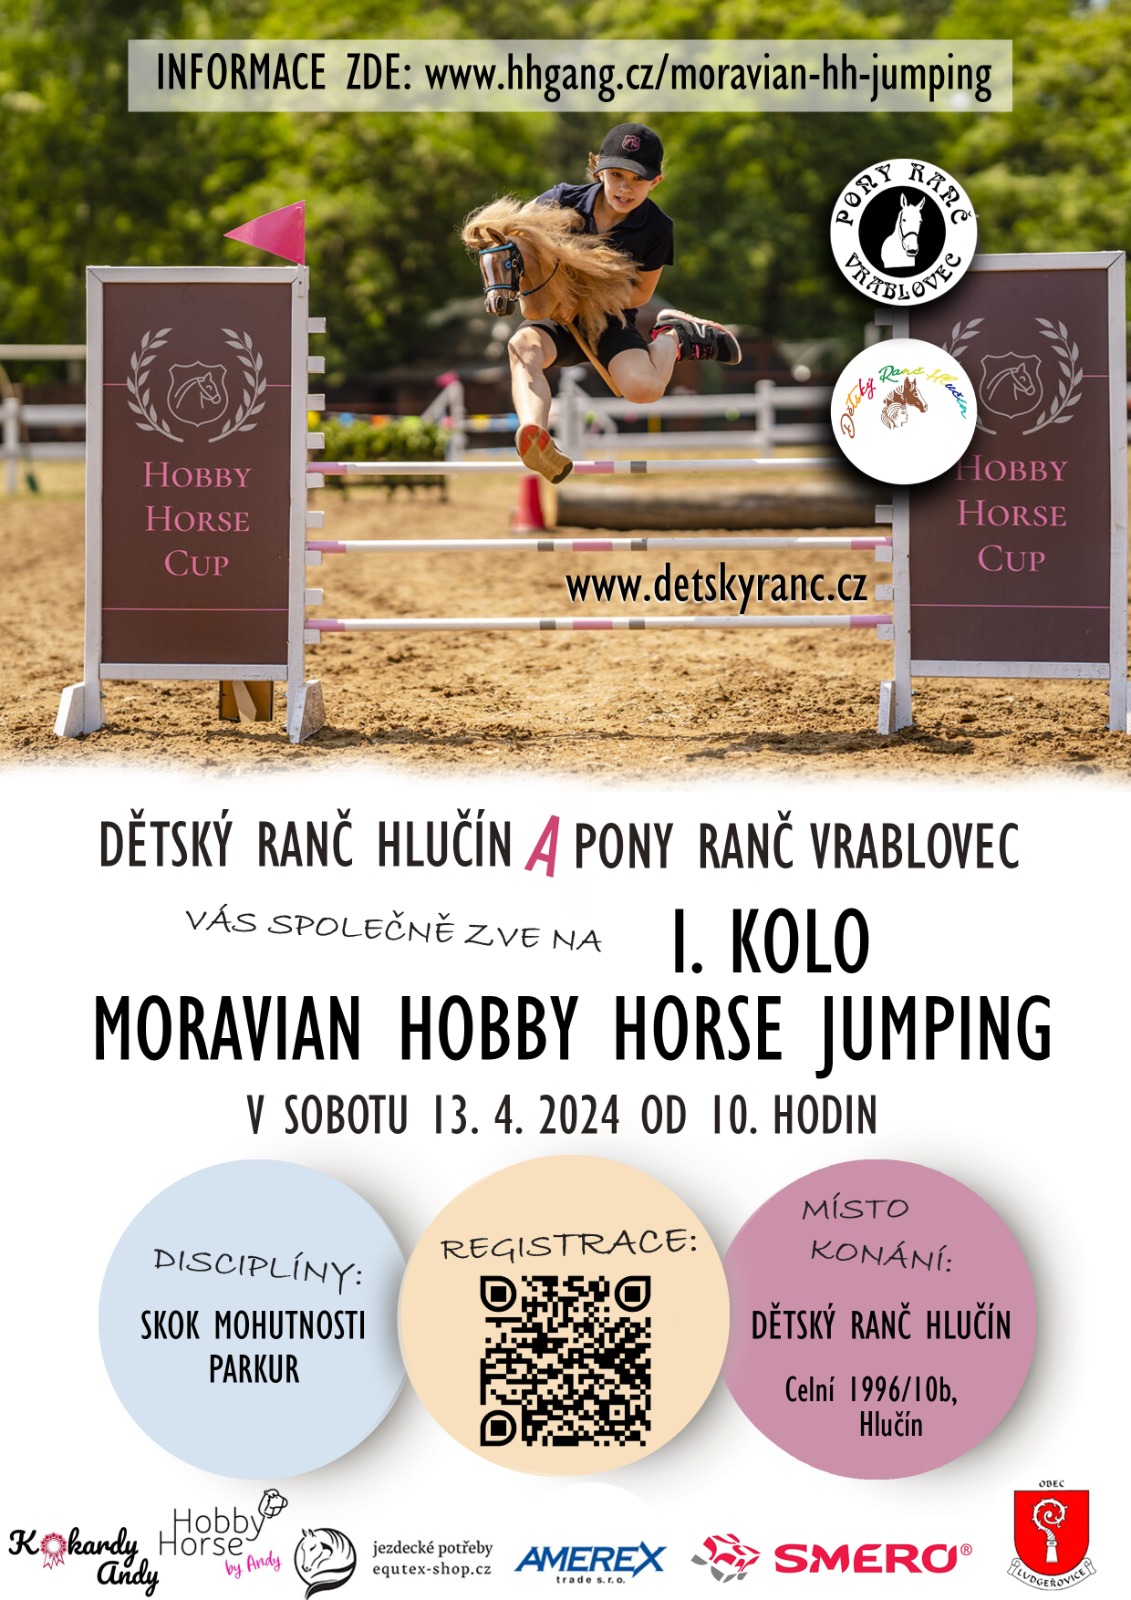 MORAVIAN HOBBY HORSE JUMPING